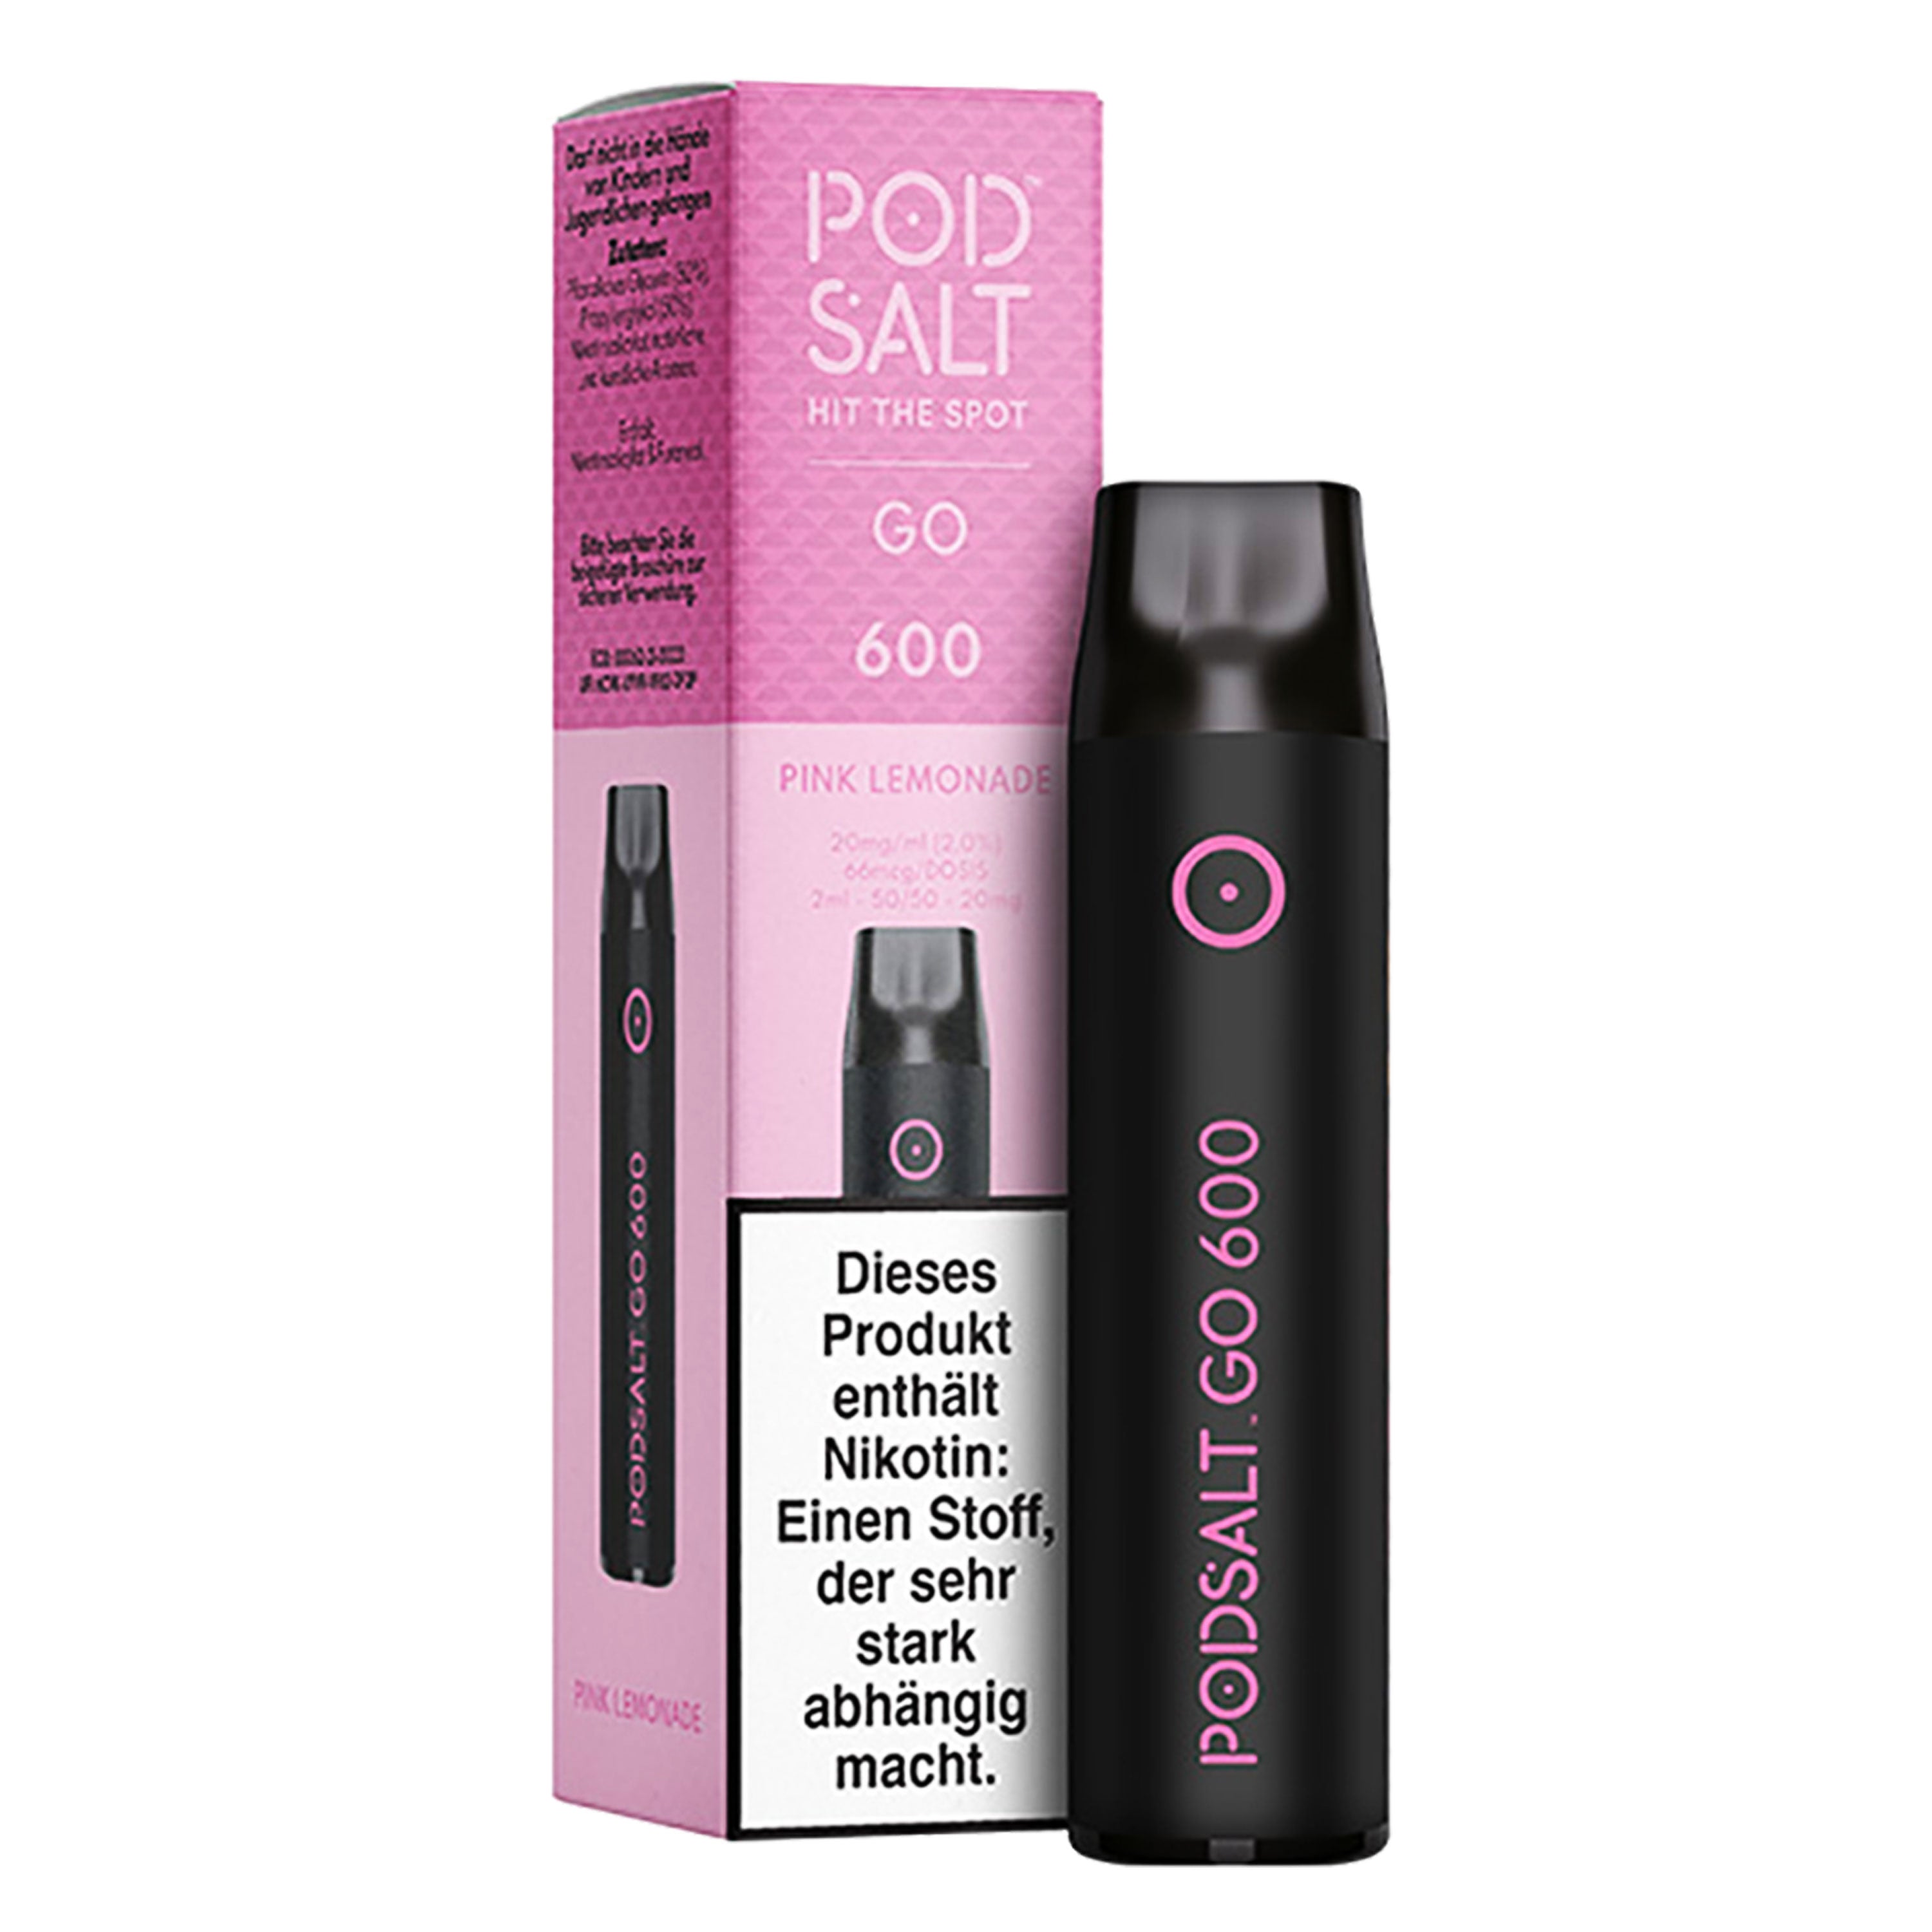 Pod Salt - Go 600 - Pink Lemonade (2 ml) 600 Züge 20mg/ml - Einweg E-Zigarette